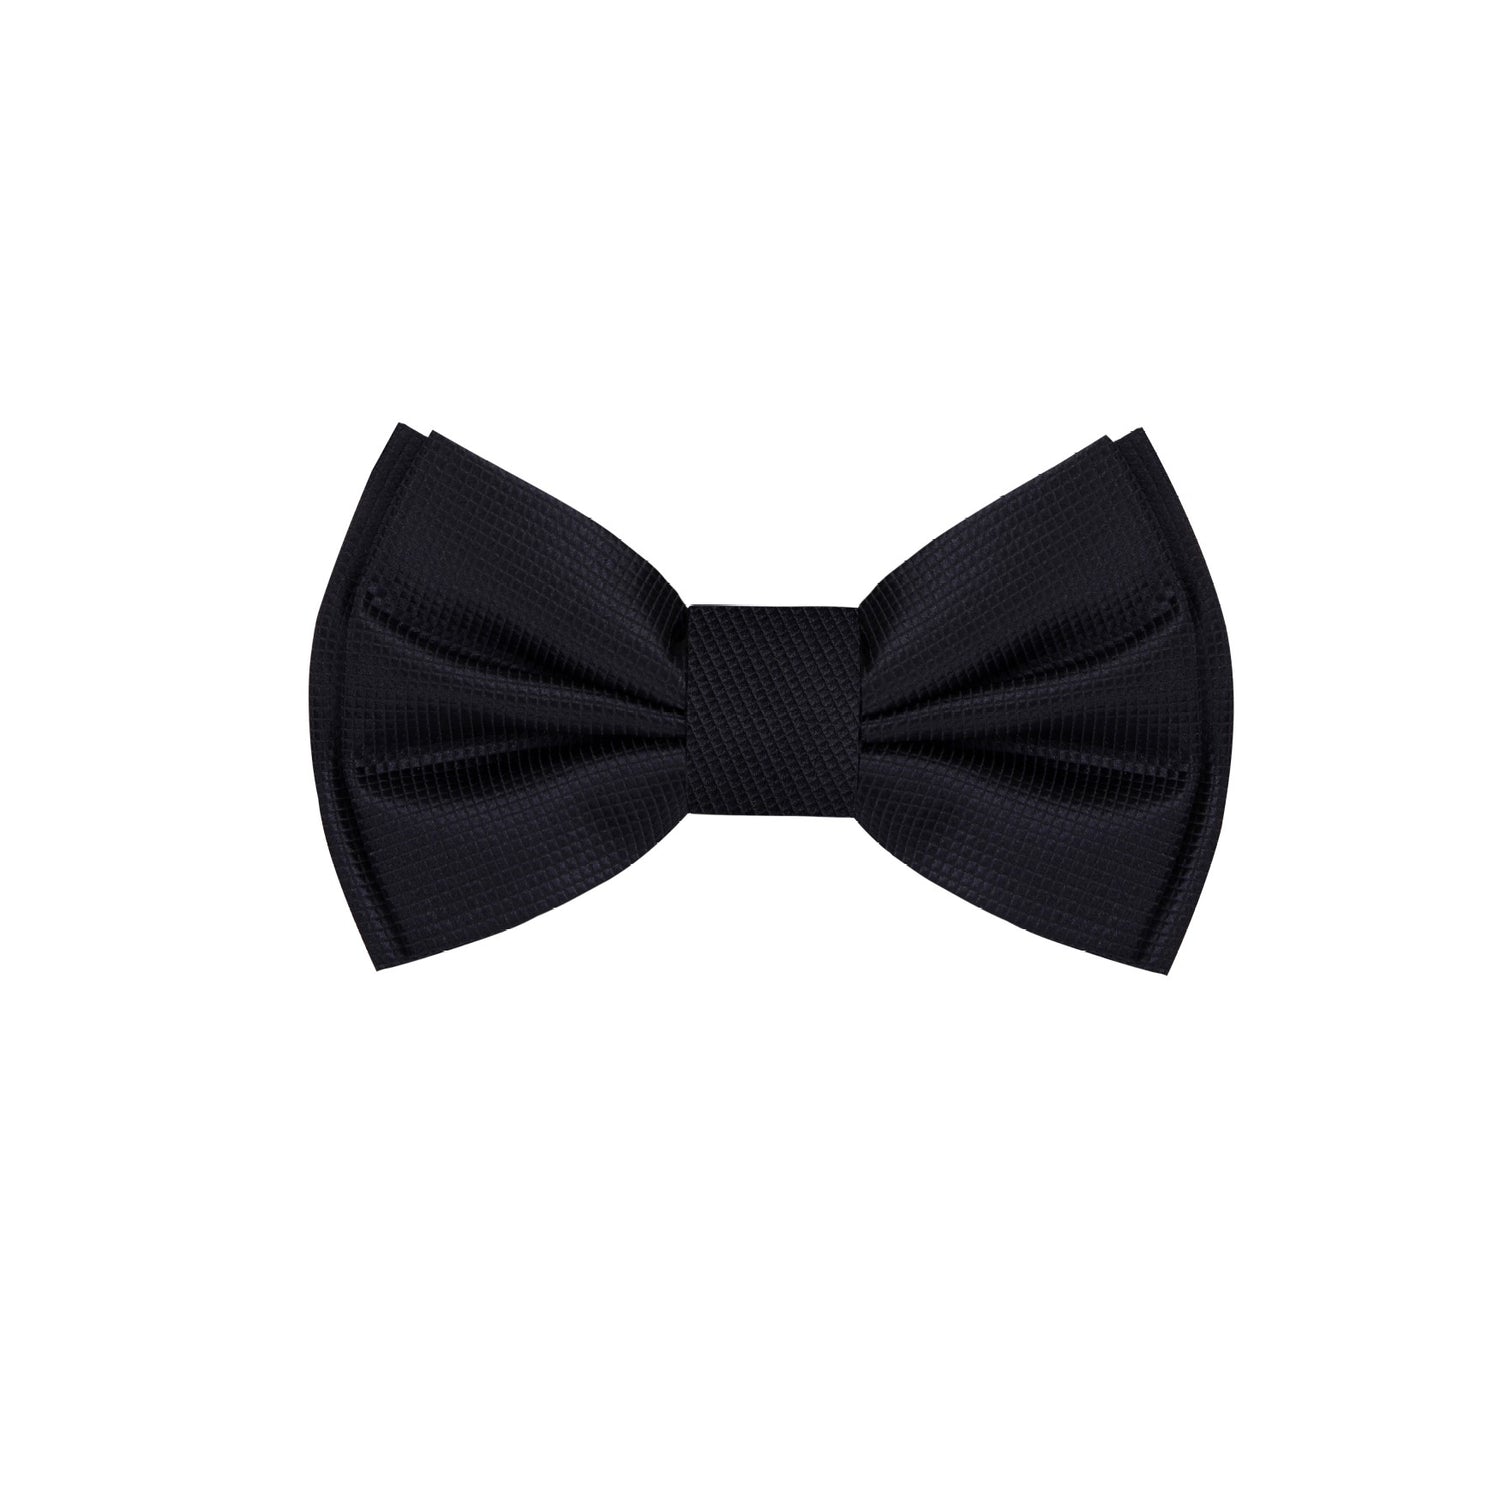 A Black Solid Pattern Silk Self Tie Bow Tie 